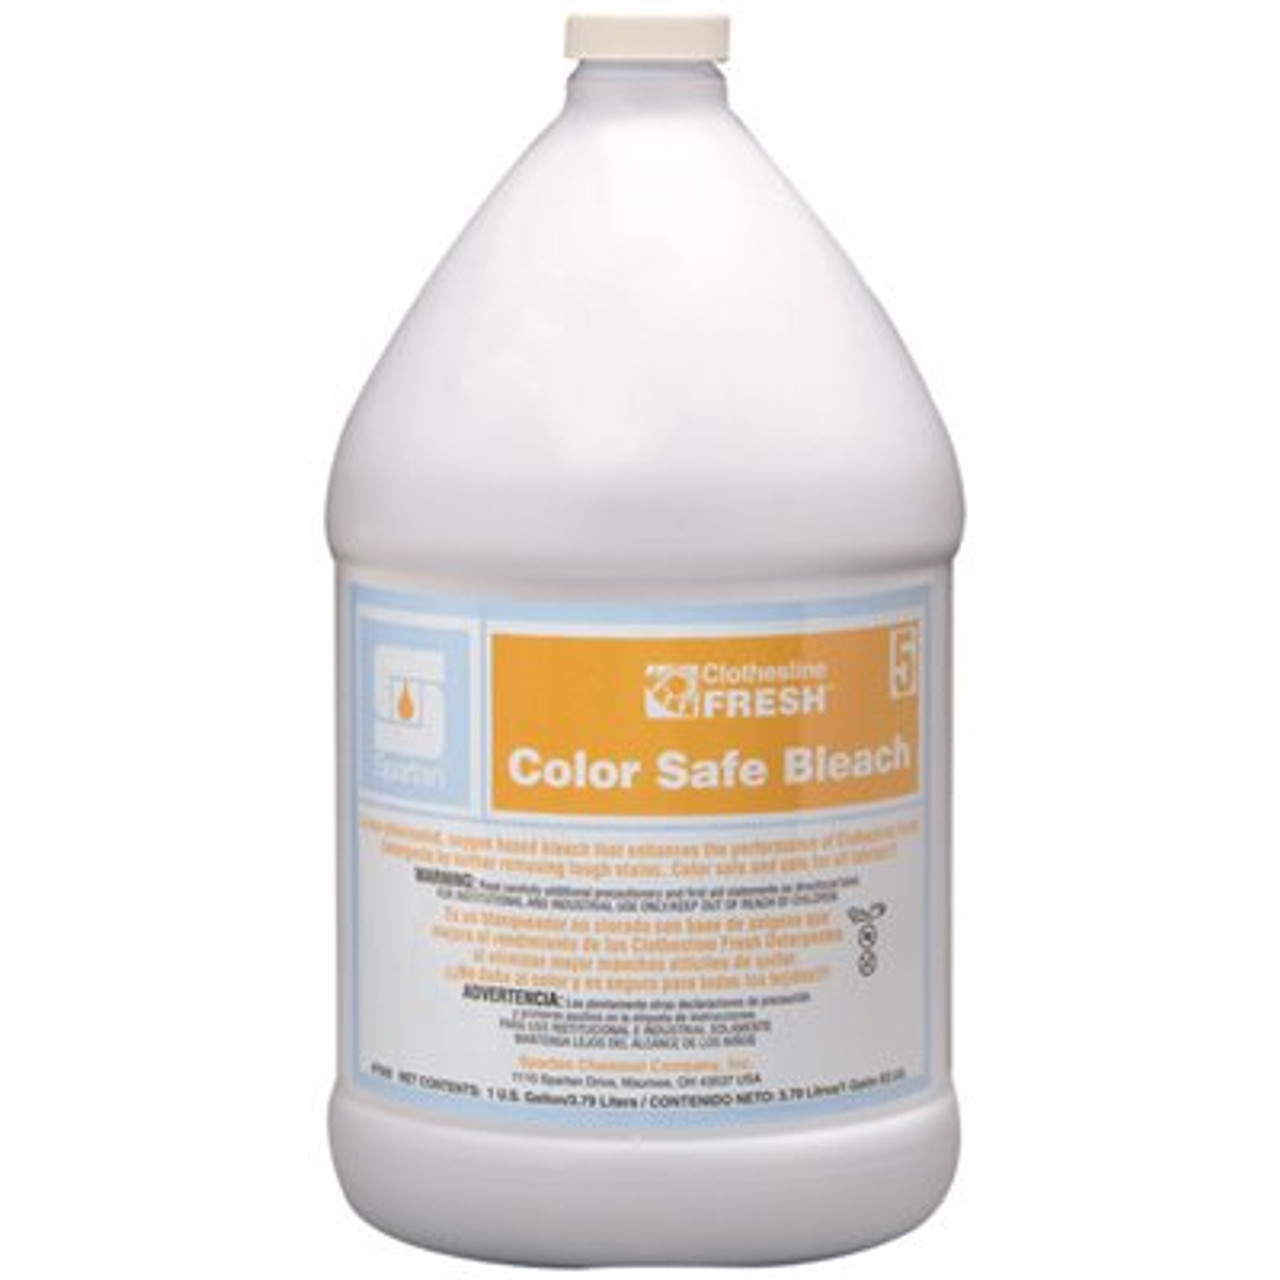 Spartan Chemical Co. Clothesline Fresh 1 Gallon Color Safe Bleach